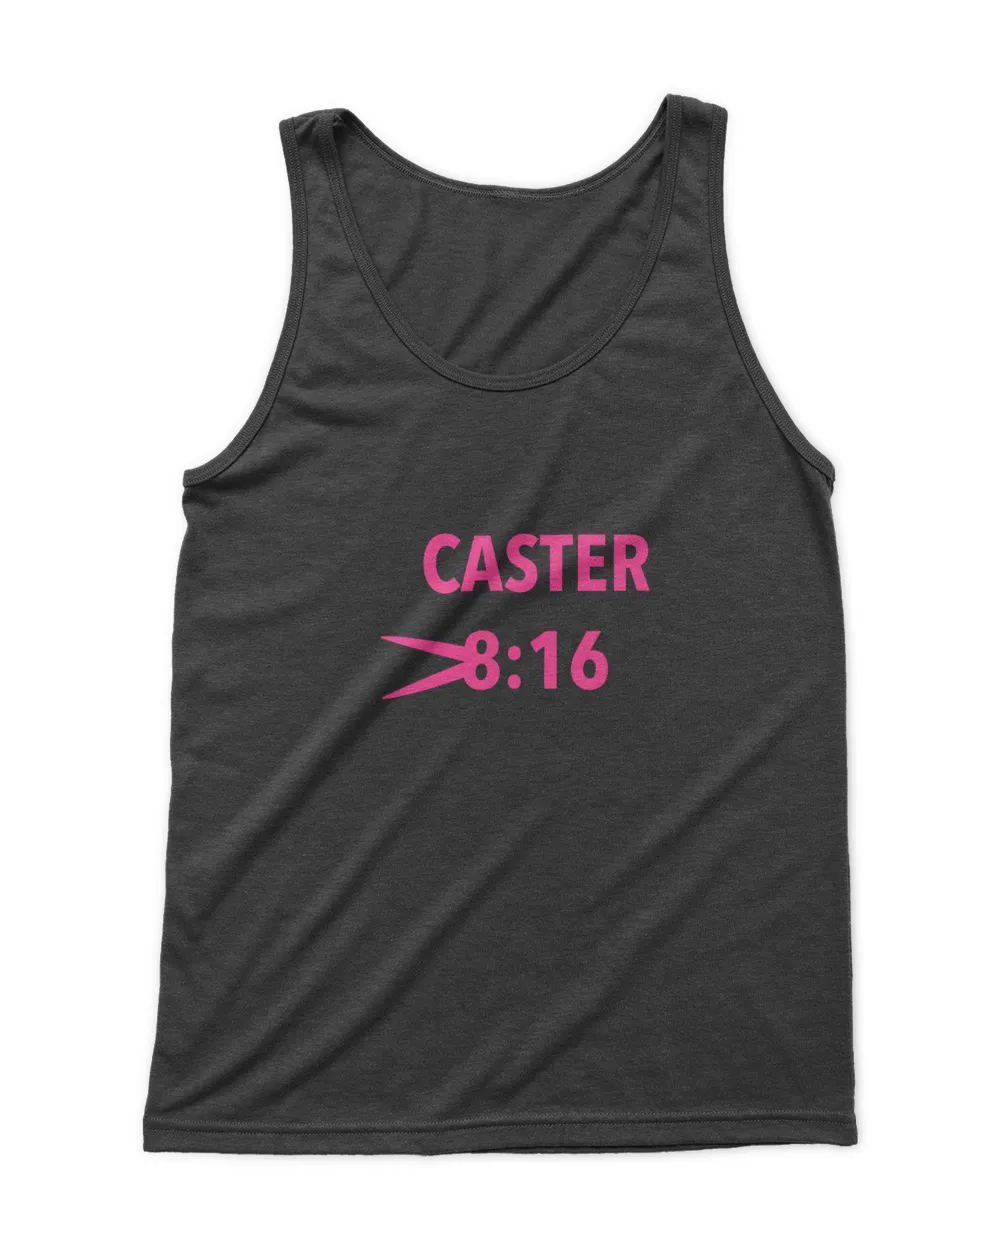 Platinum Max Caster Caster 8:16 Shirt